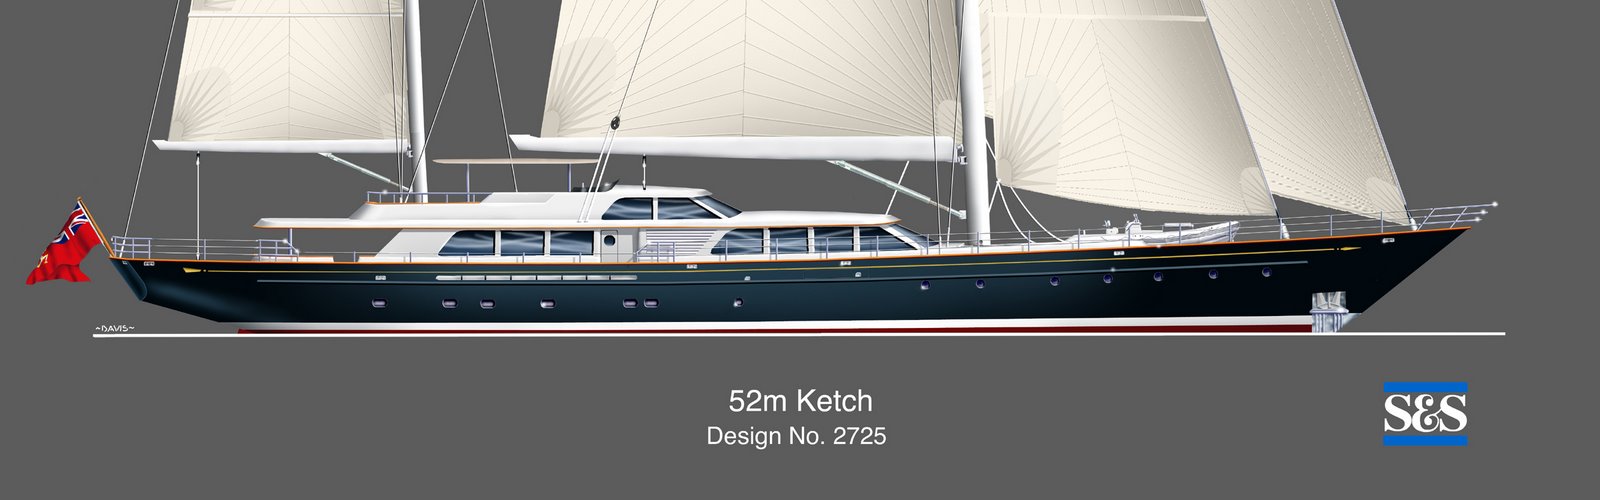 [S&S_52m_Ketch_Profile.jpg]